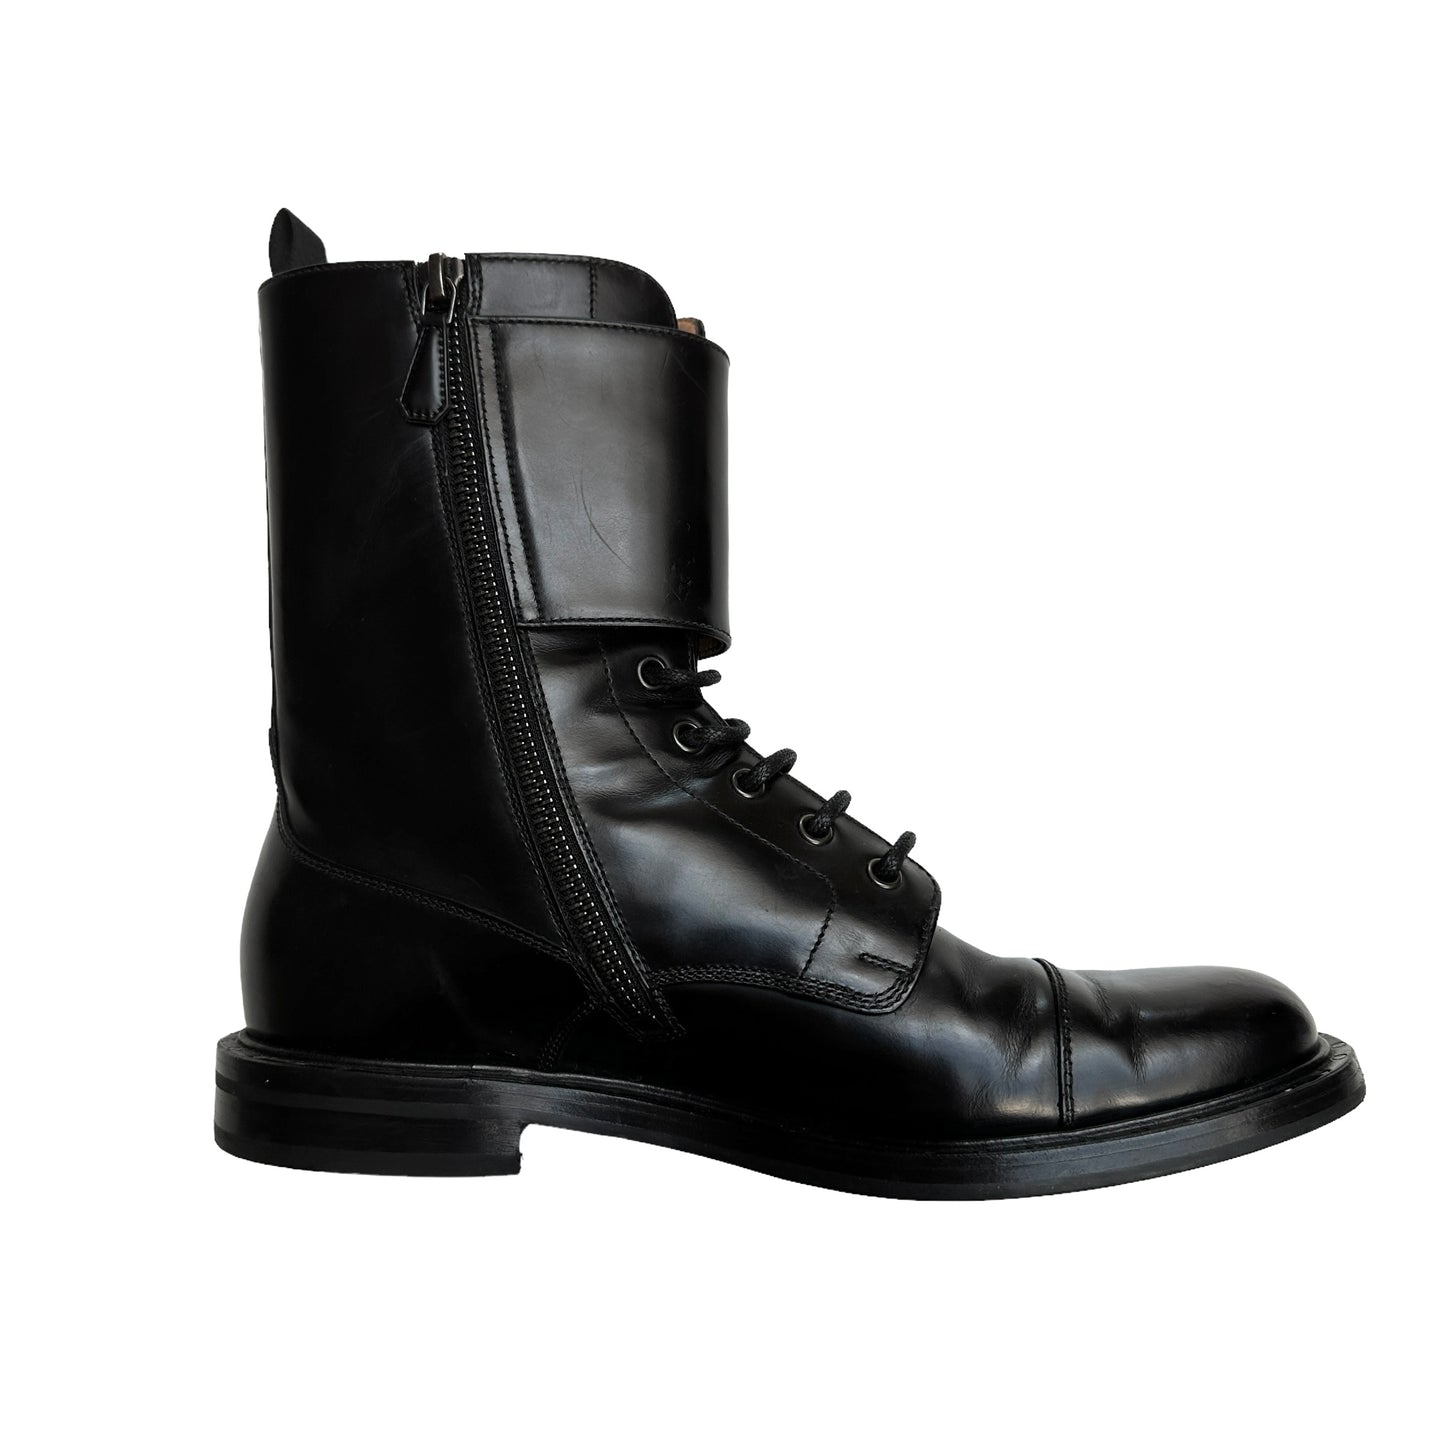 Black Leather Combat Boots - 8